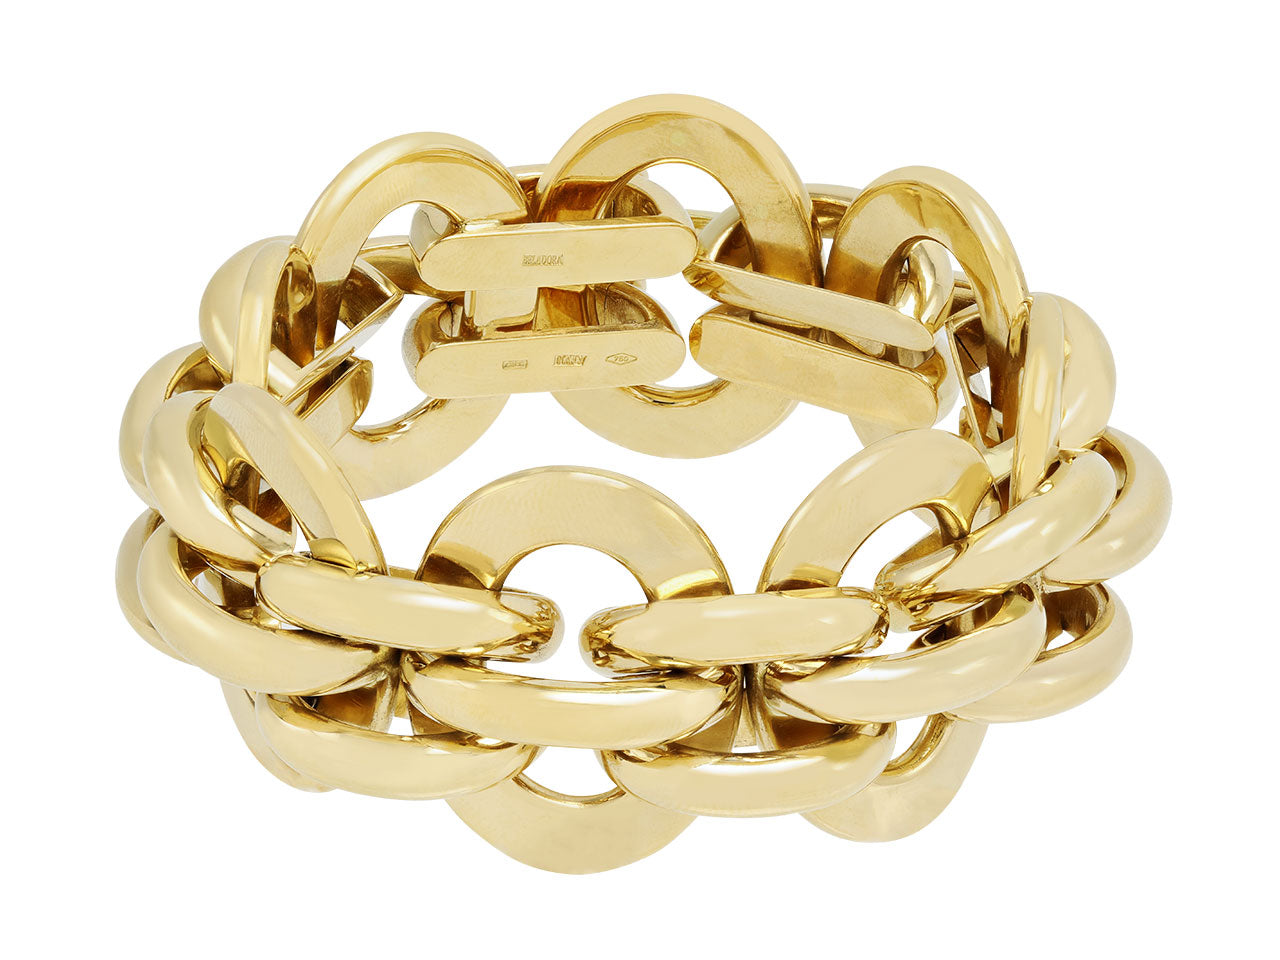 Gold Link Bracelet in 18K, by Beladora